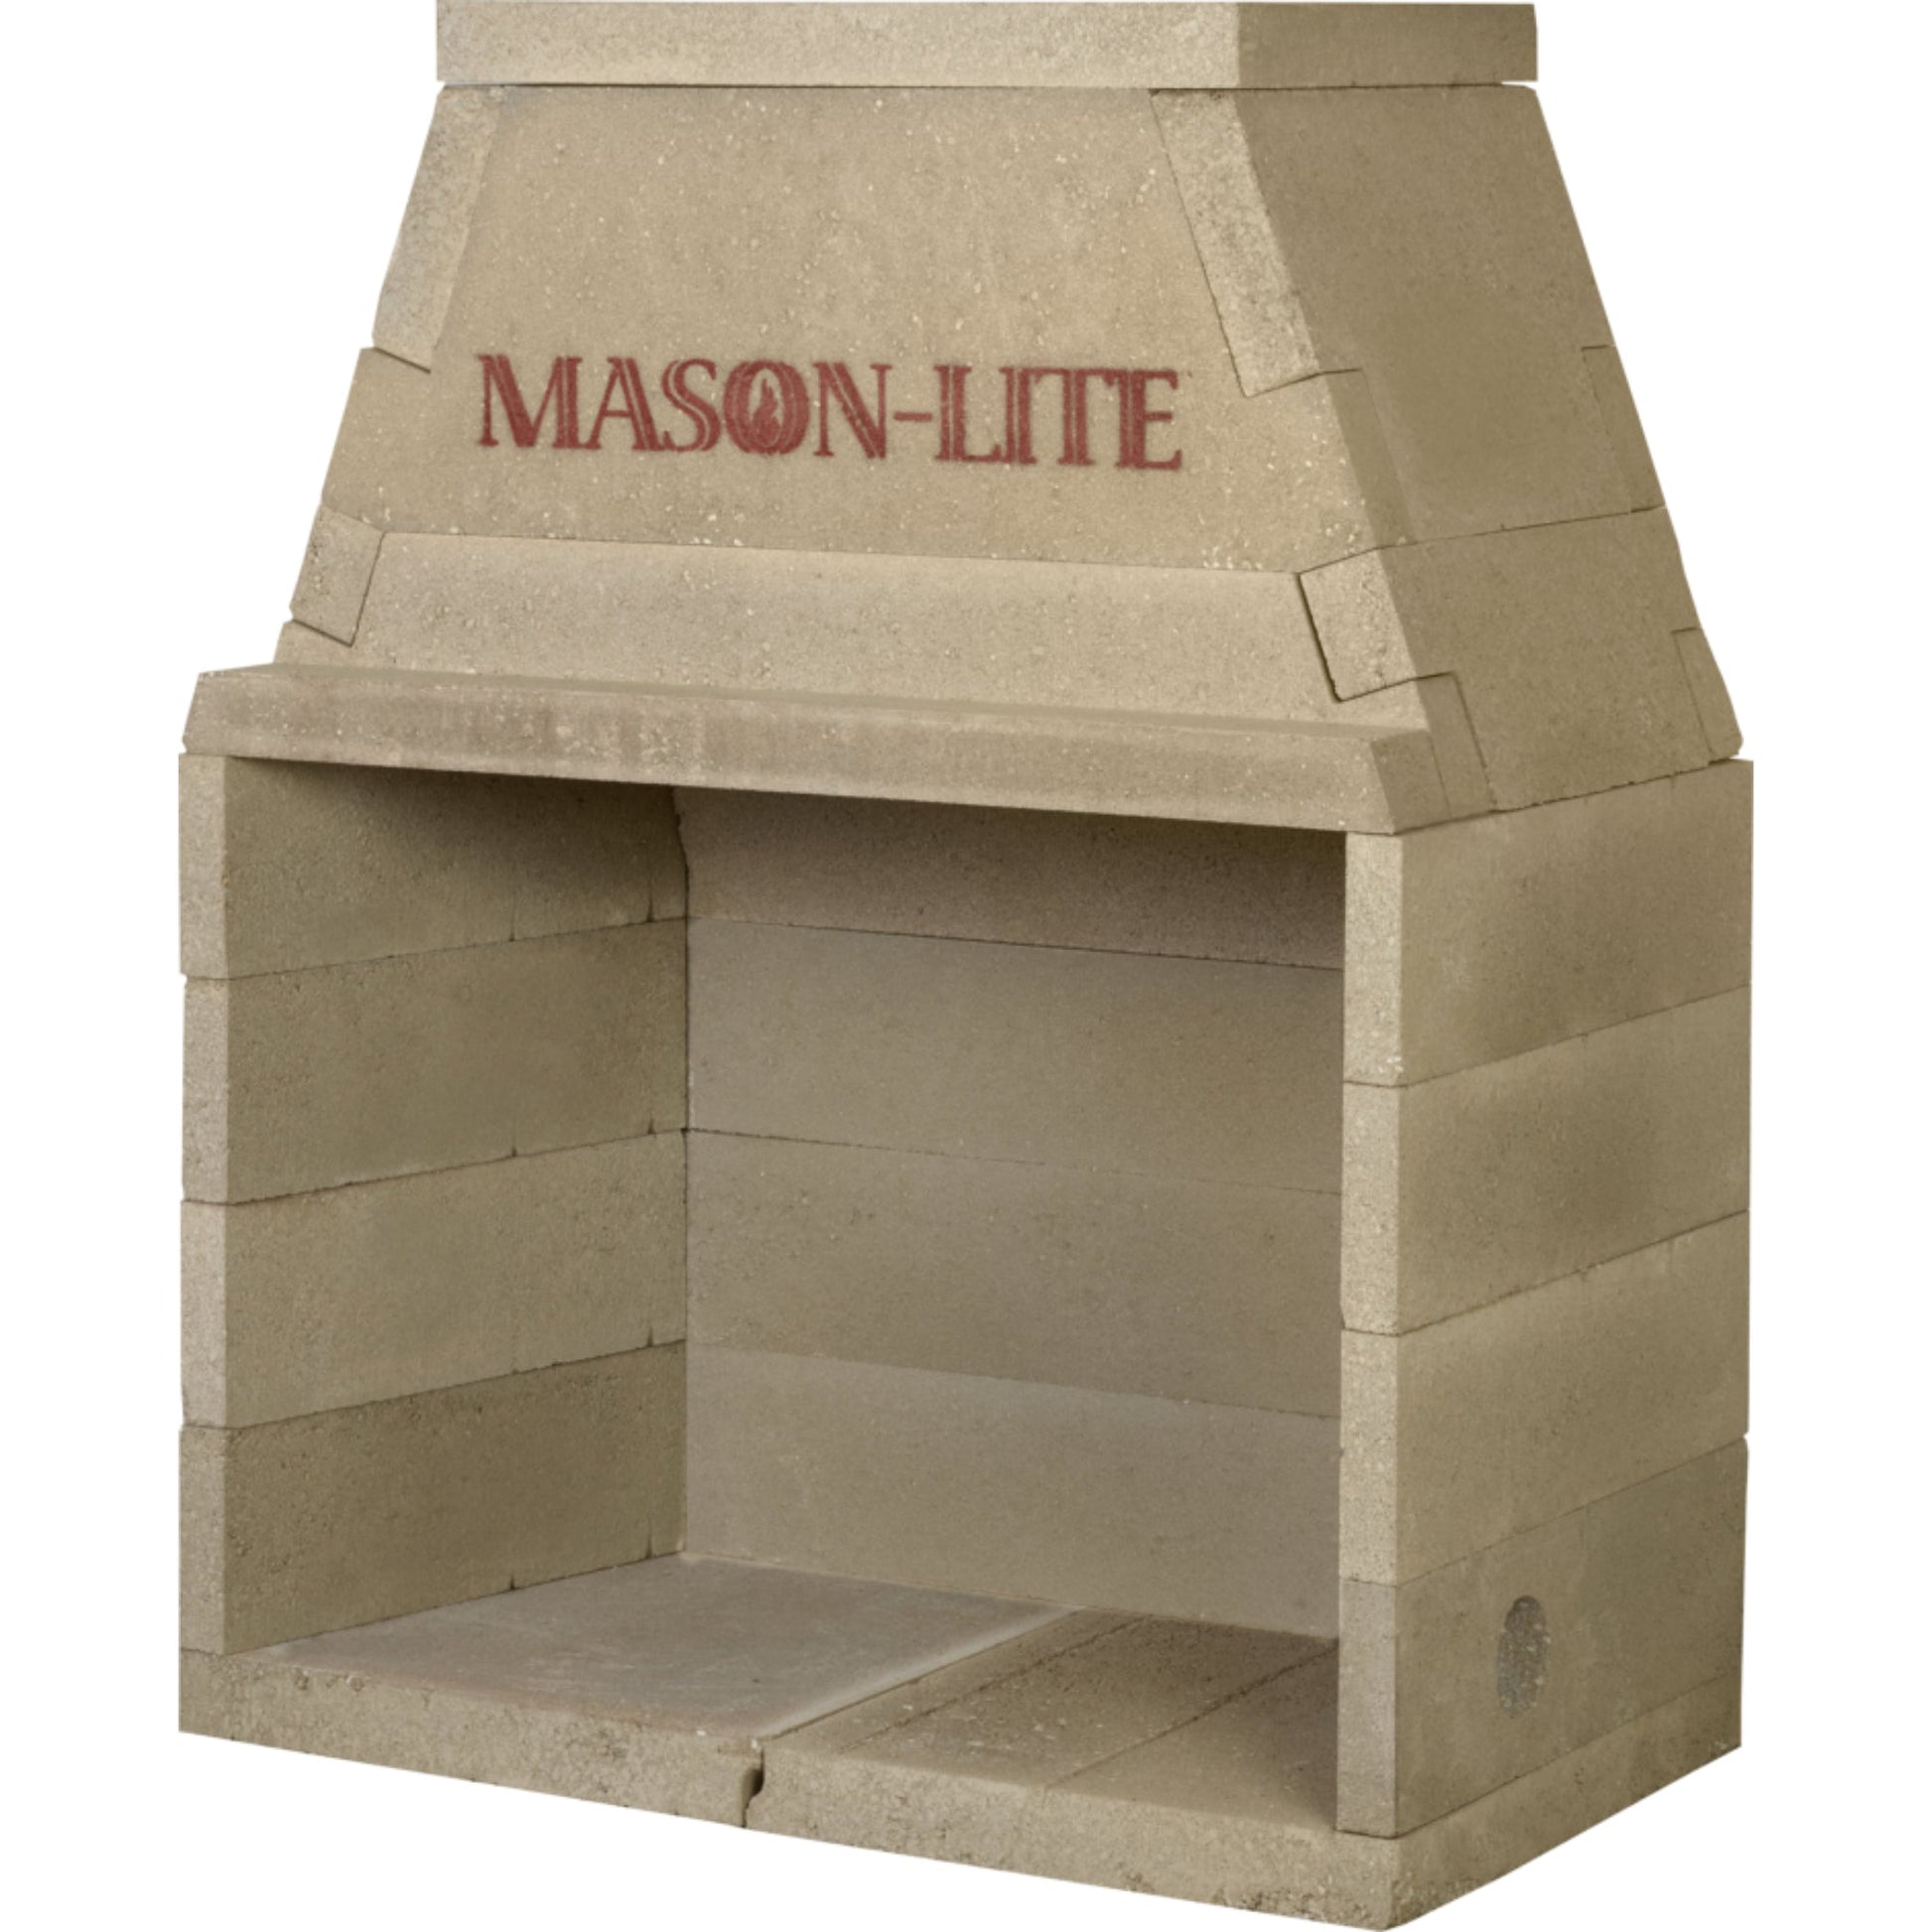 Mason-Lite 44" Pre-Cast Masonry Firebox Kit